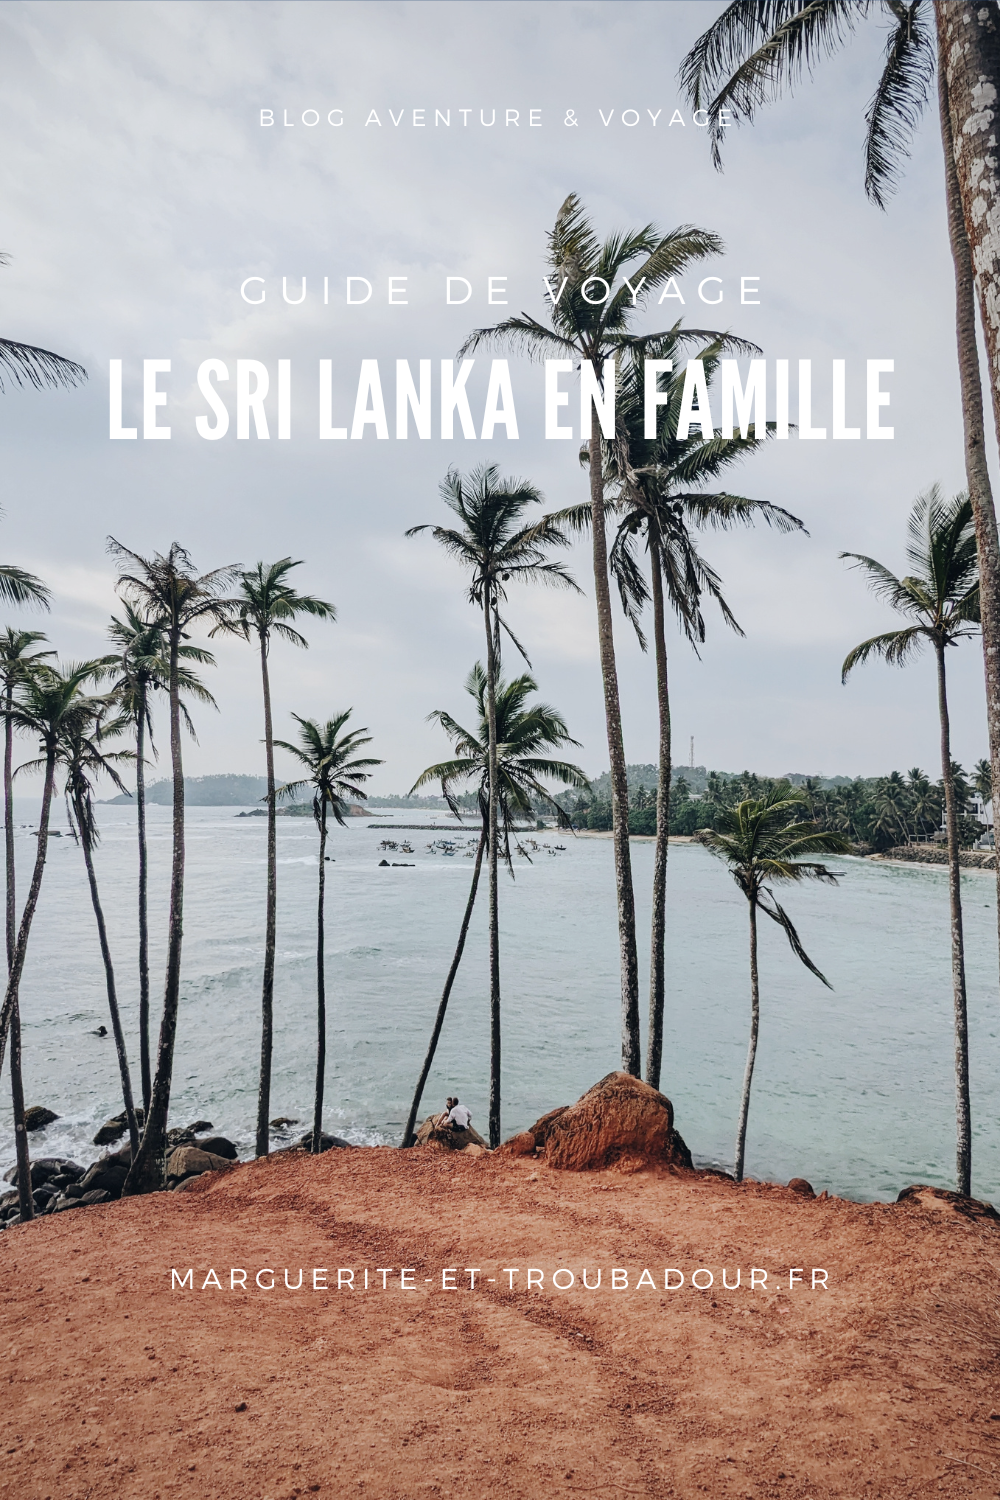 Organiser son voyage au Sri Lanka en famille - Blog voyage en famille - Blog voyage aventure